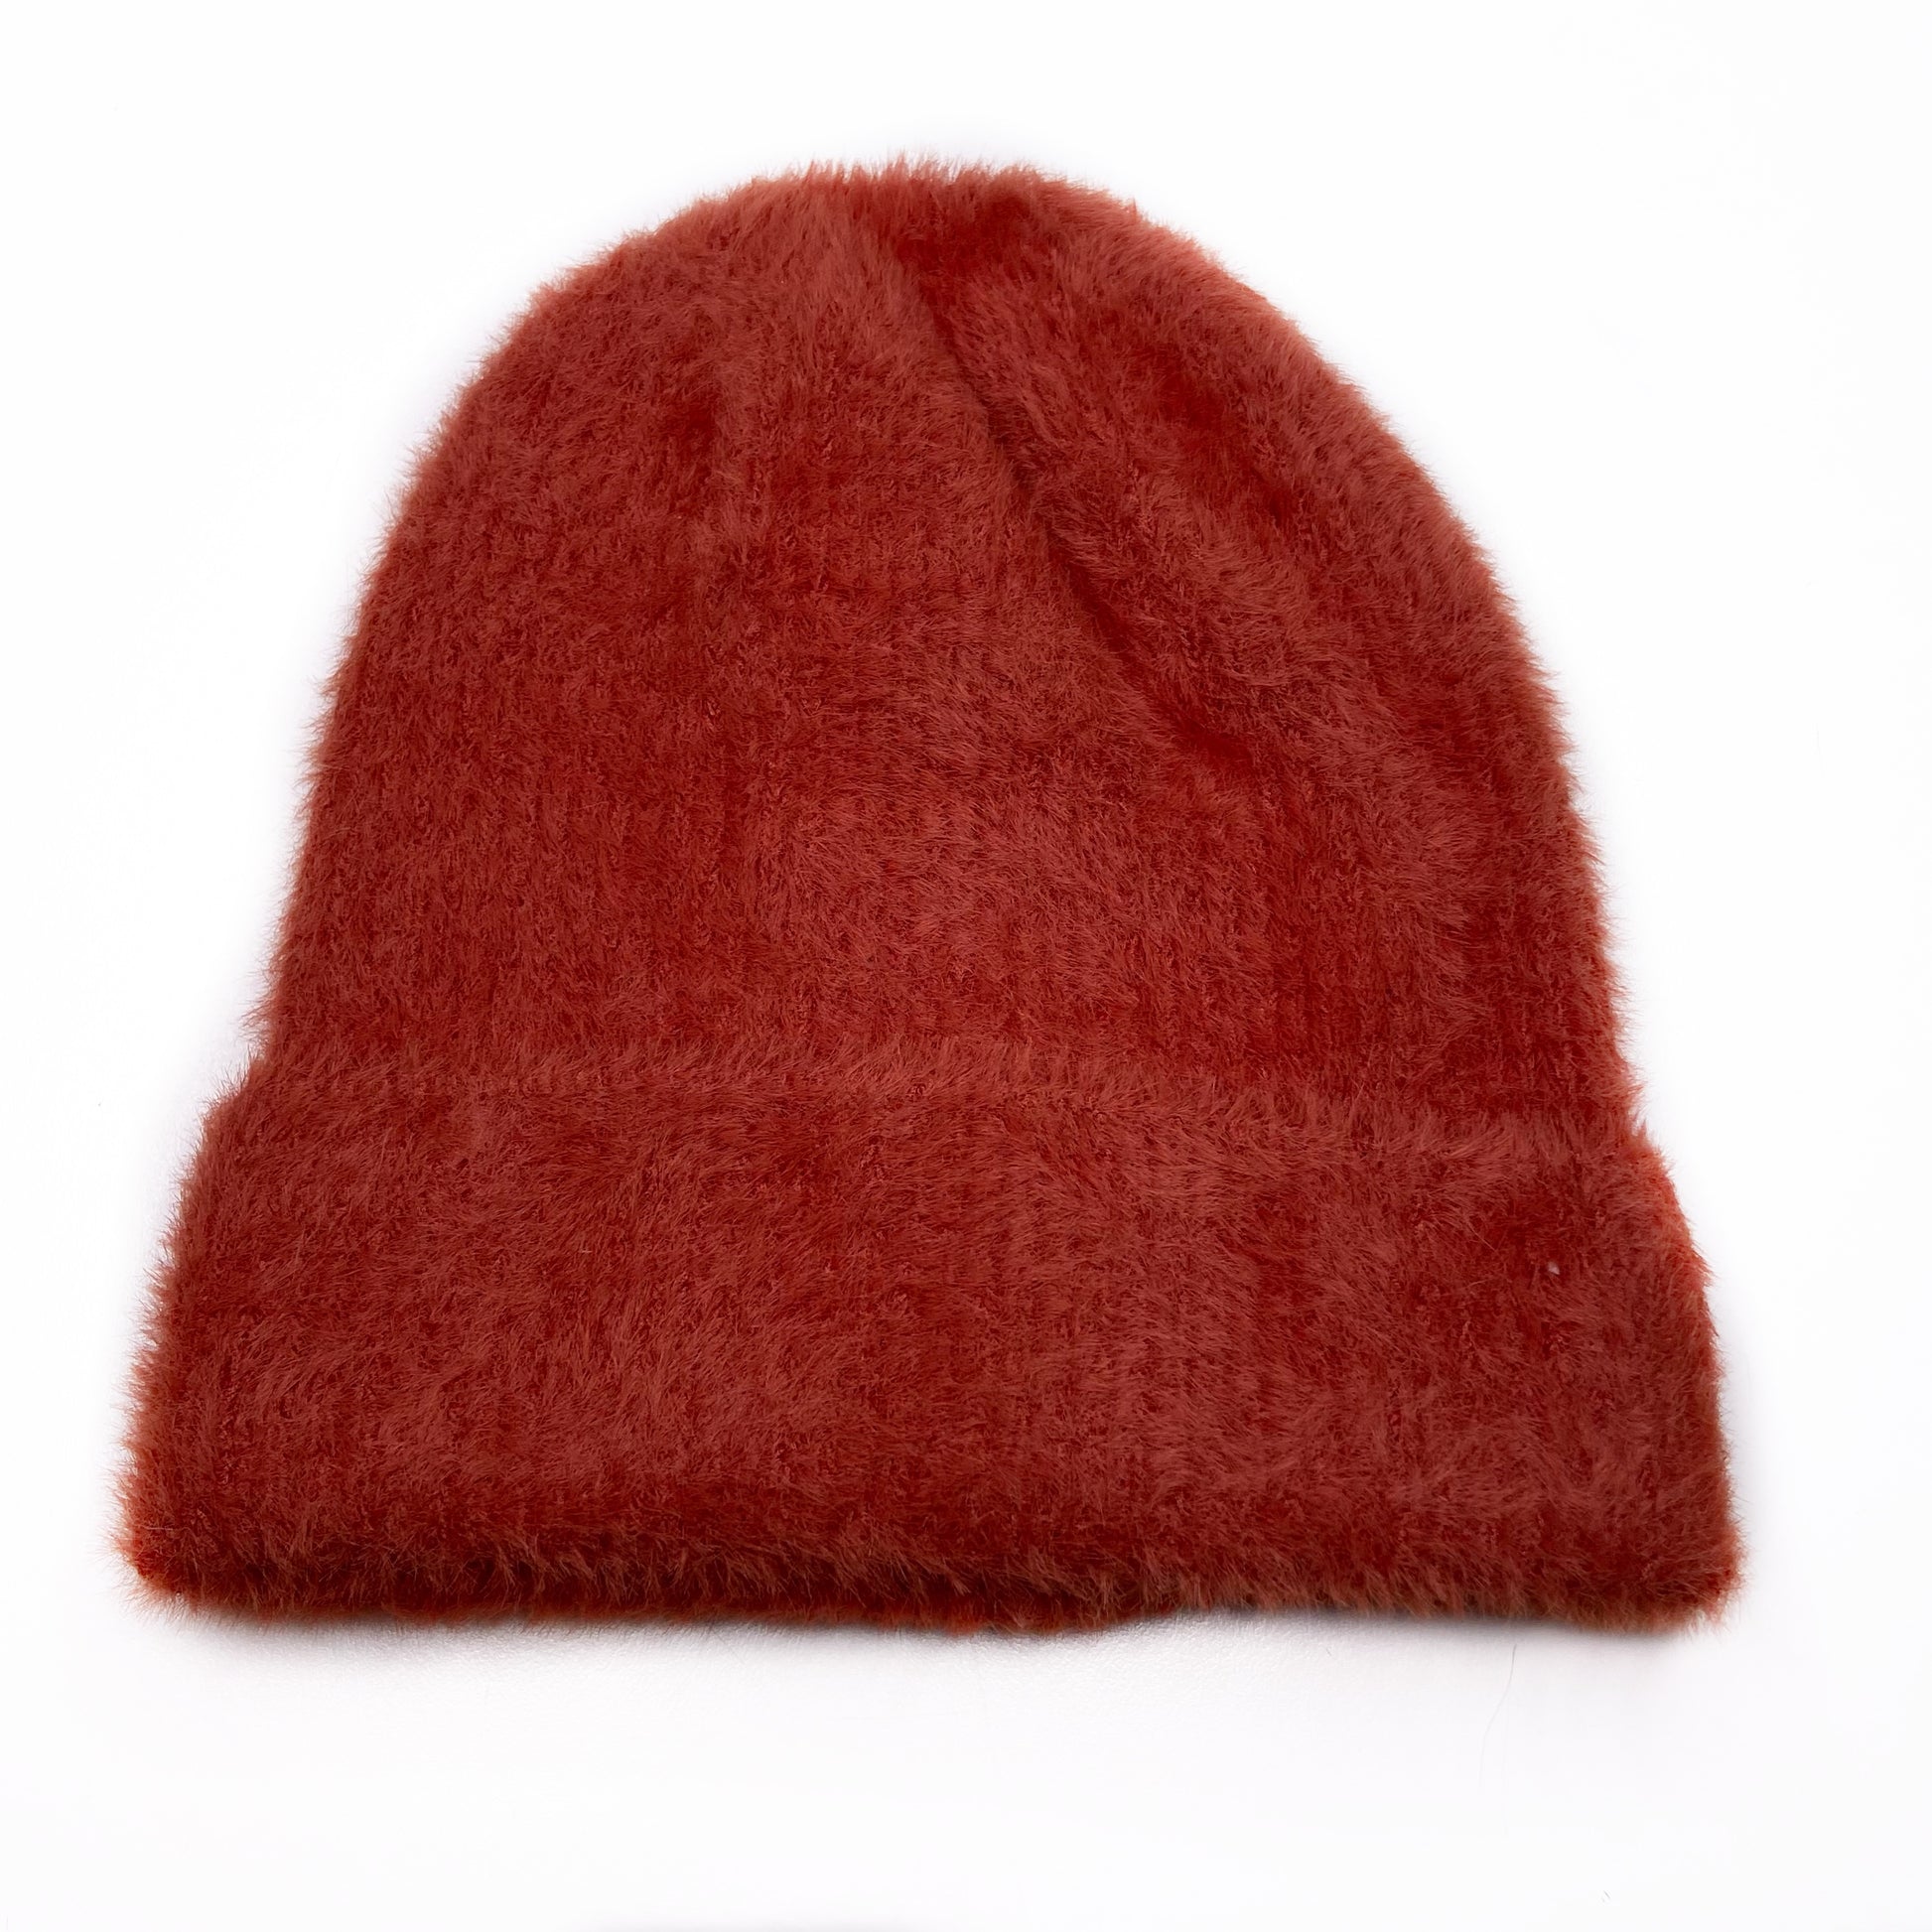 fuzzy beanie hat in rust red